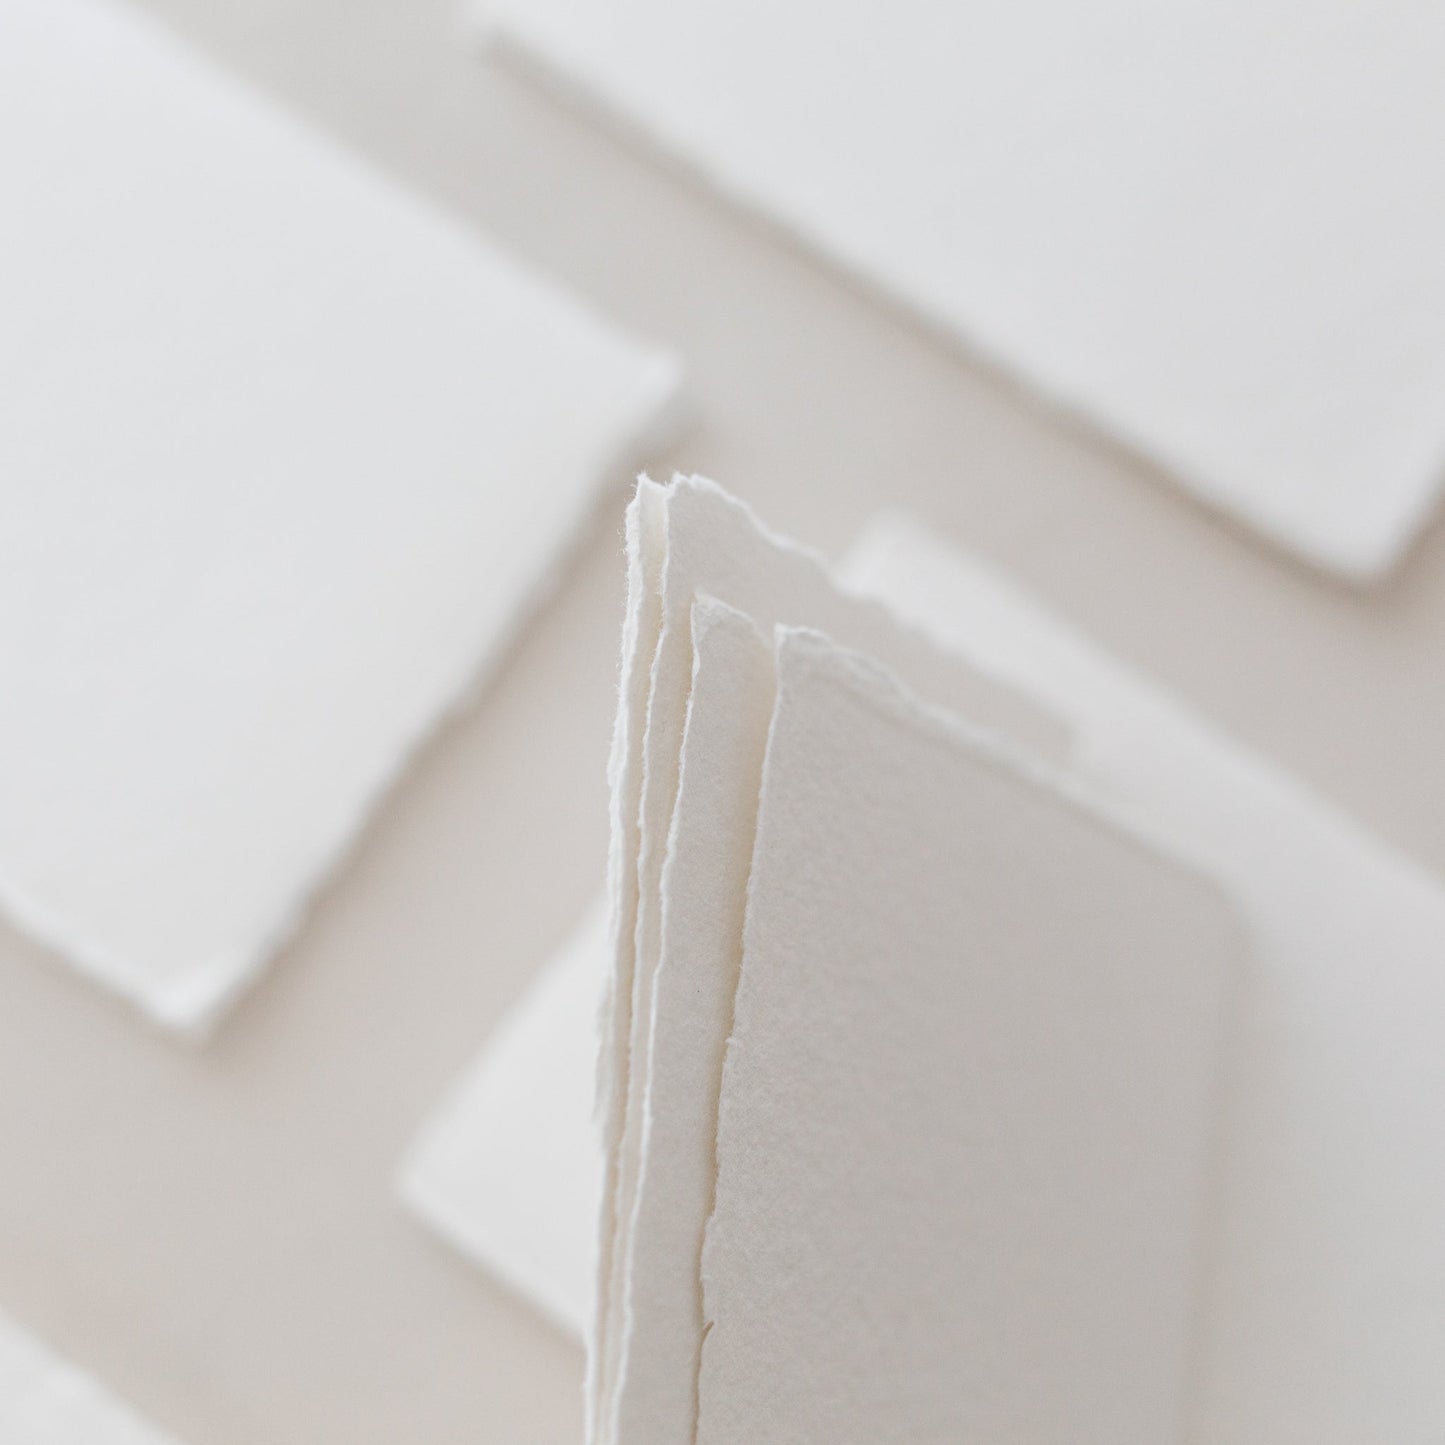 A4 – White Handmade Paper